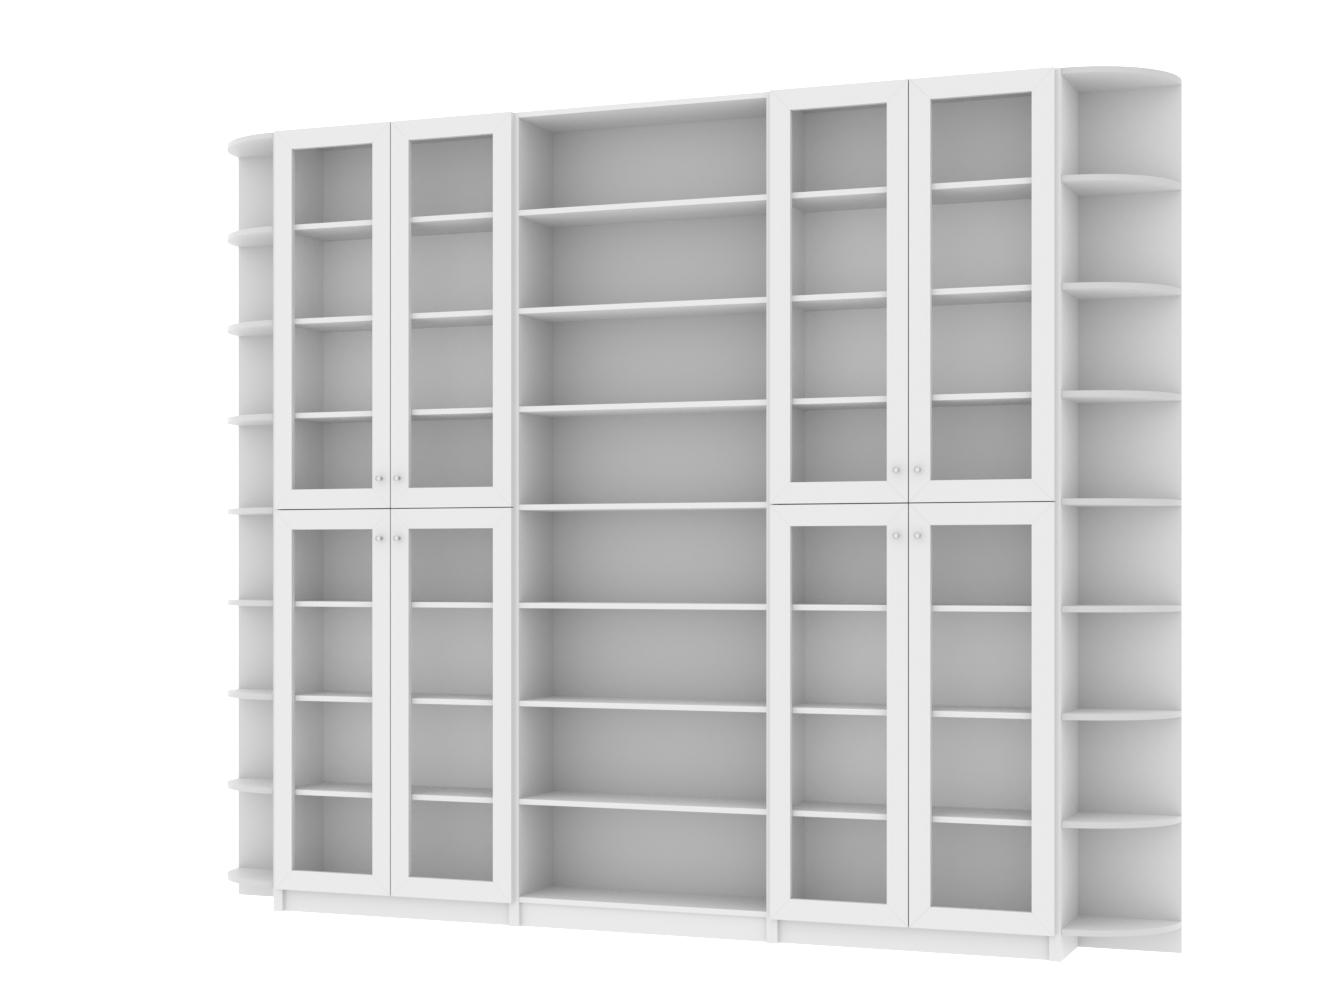 Книжный шкаф Билли 425 white ИКЕА (IKEA) изображение товара